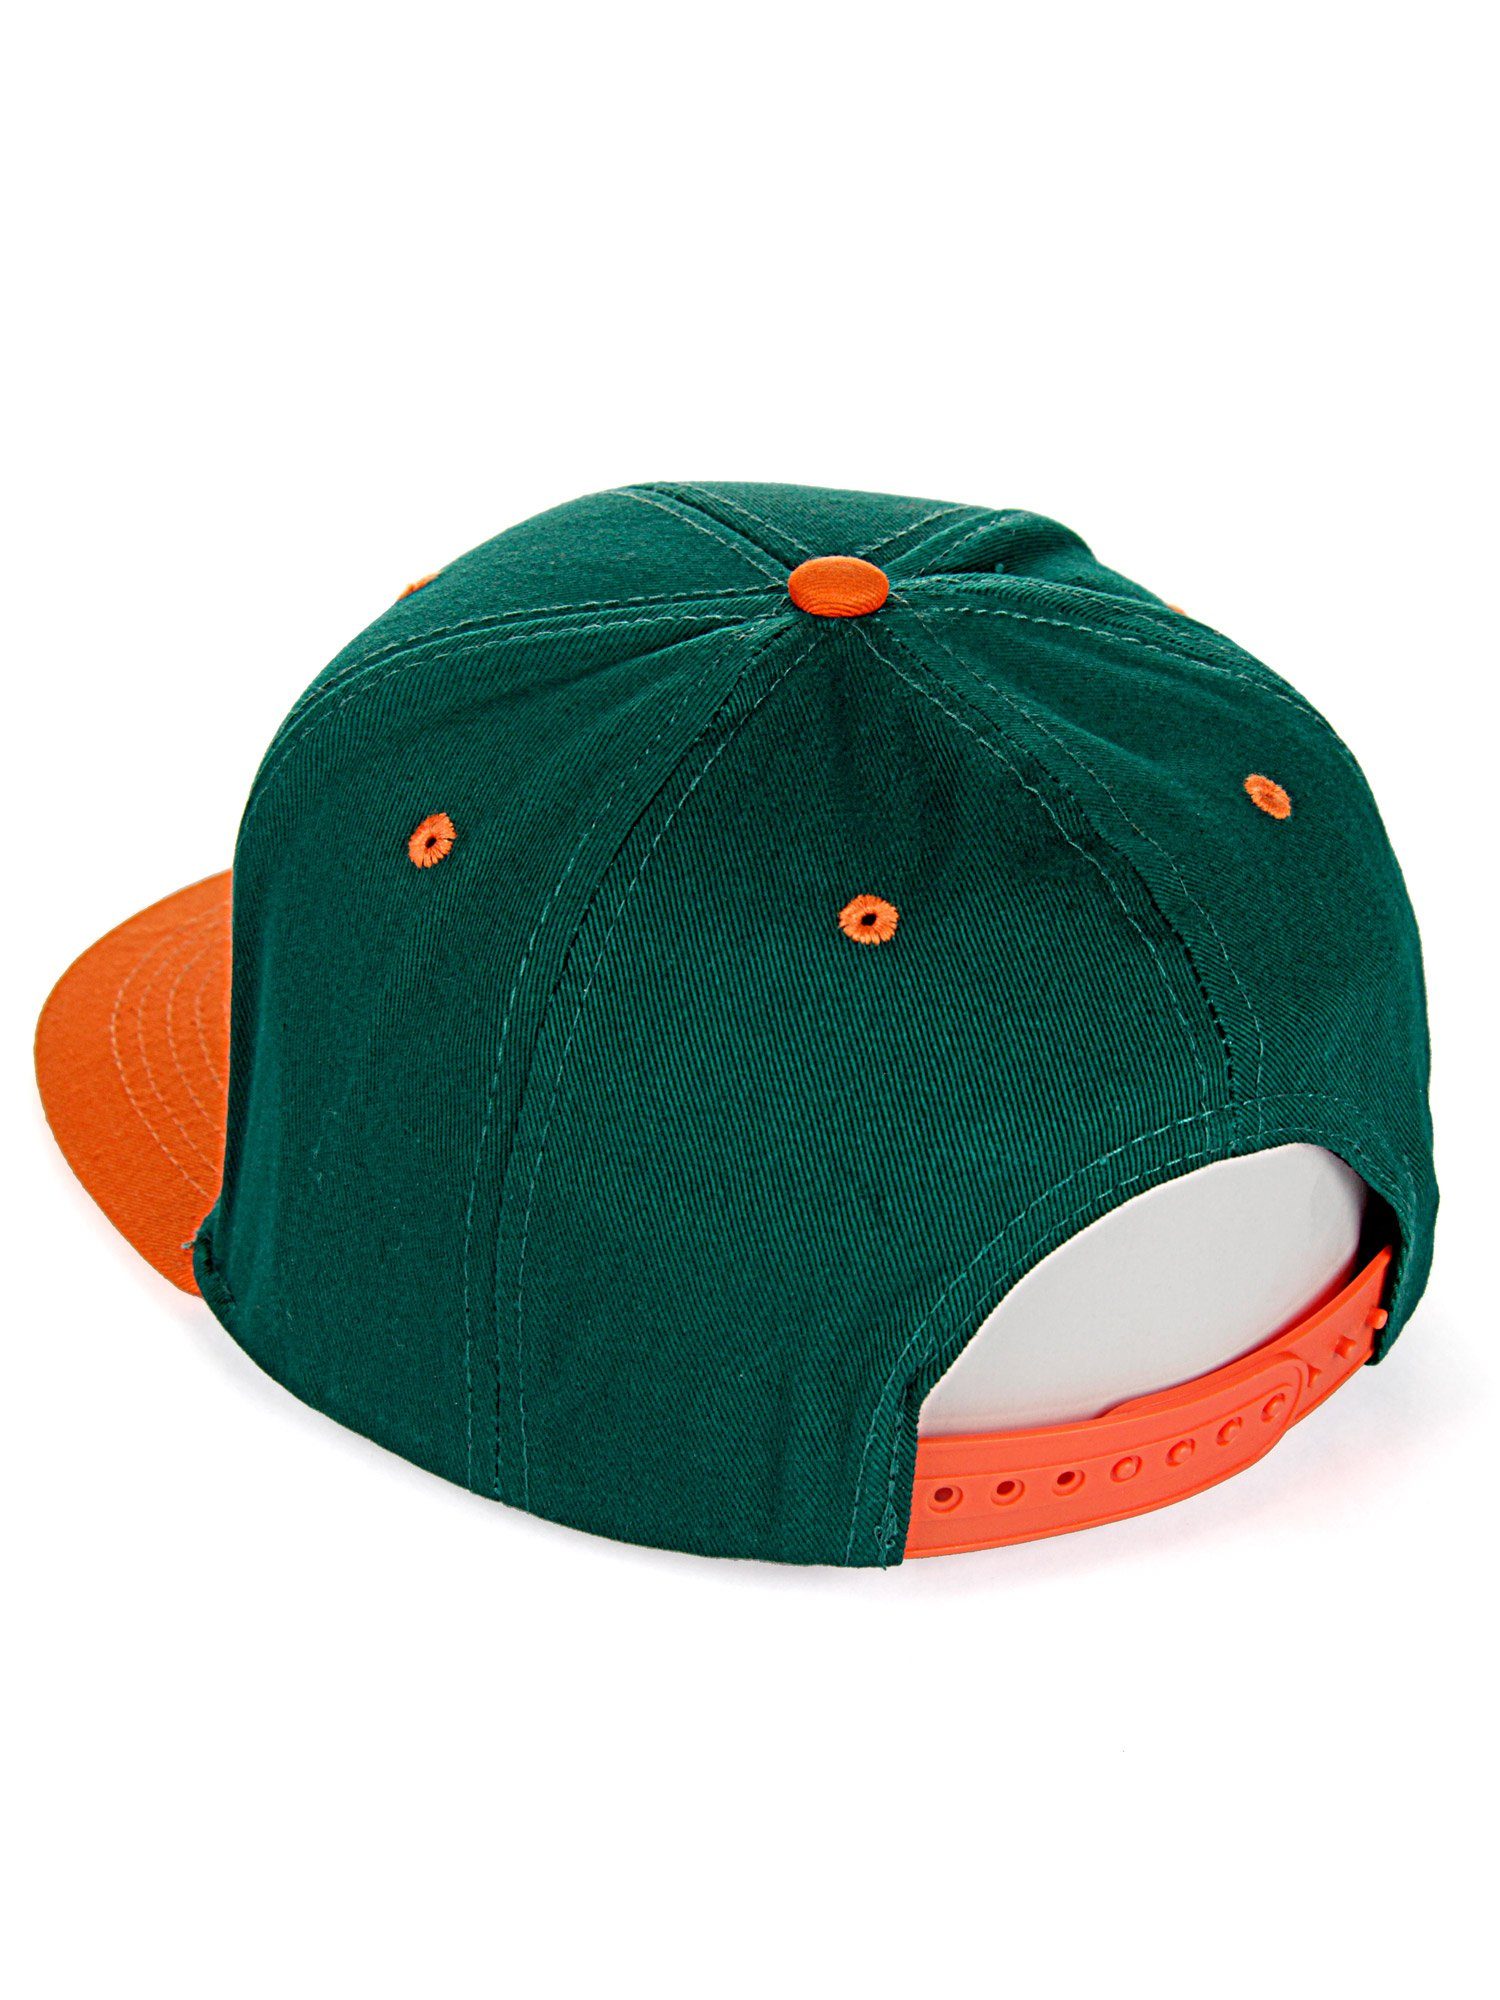 Cap grün-orange Schirm RedBridge mit Sittingbourne kontrastfarbigem Baseball